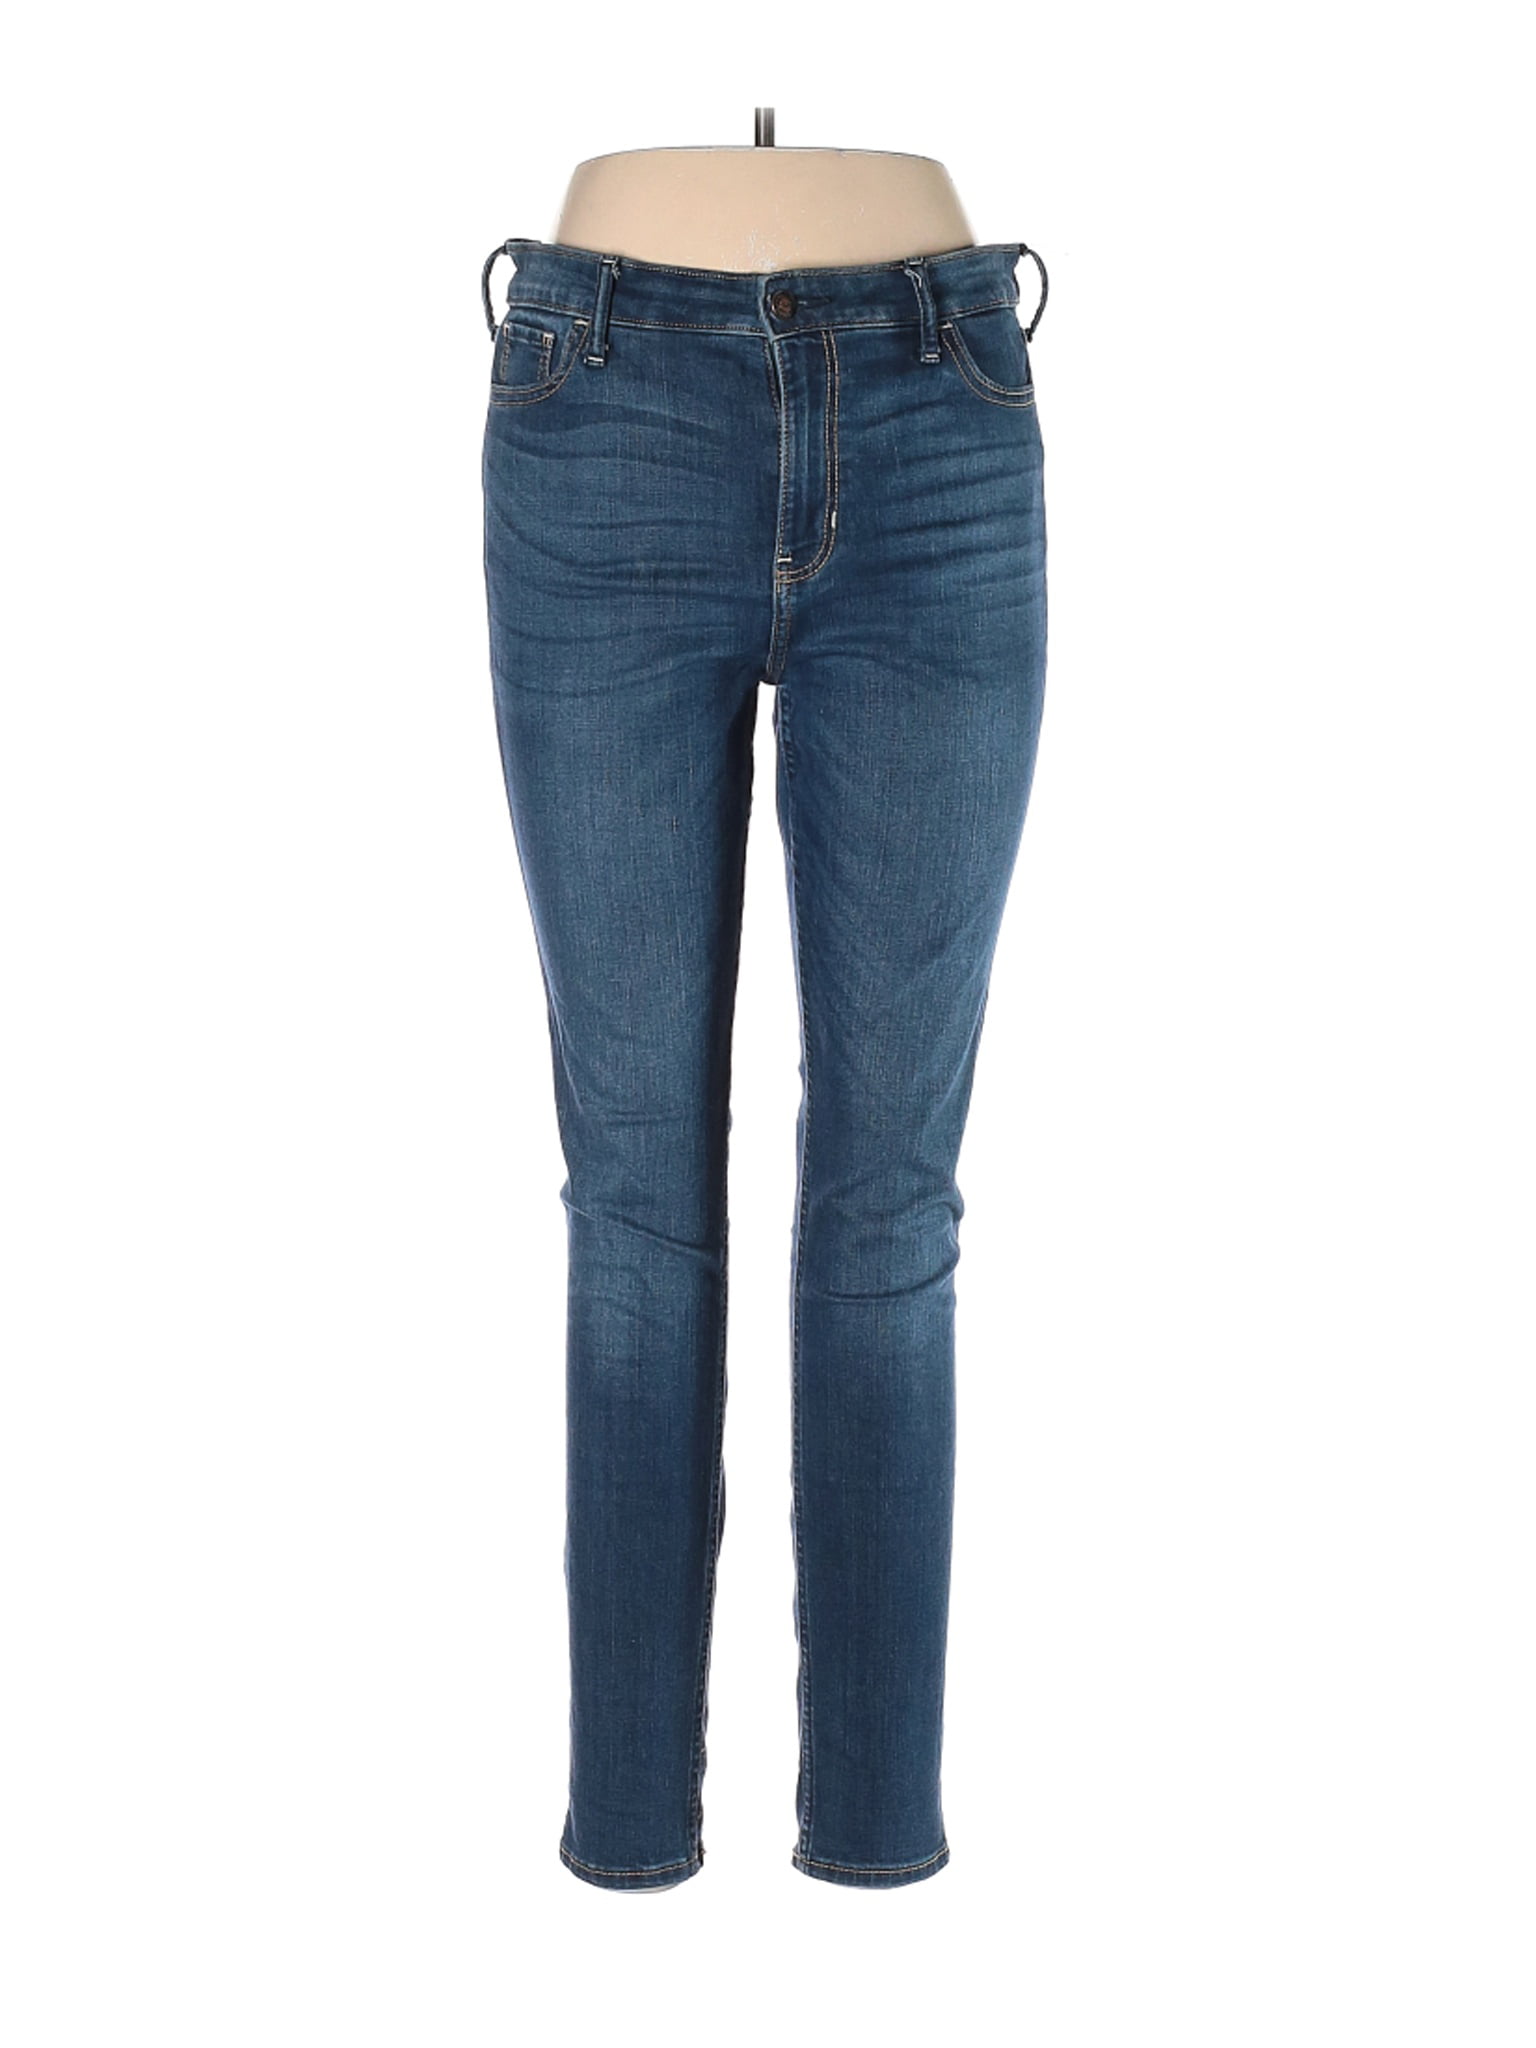 hollister jeans size 11